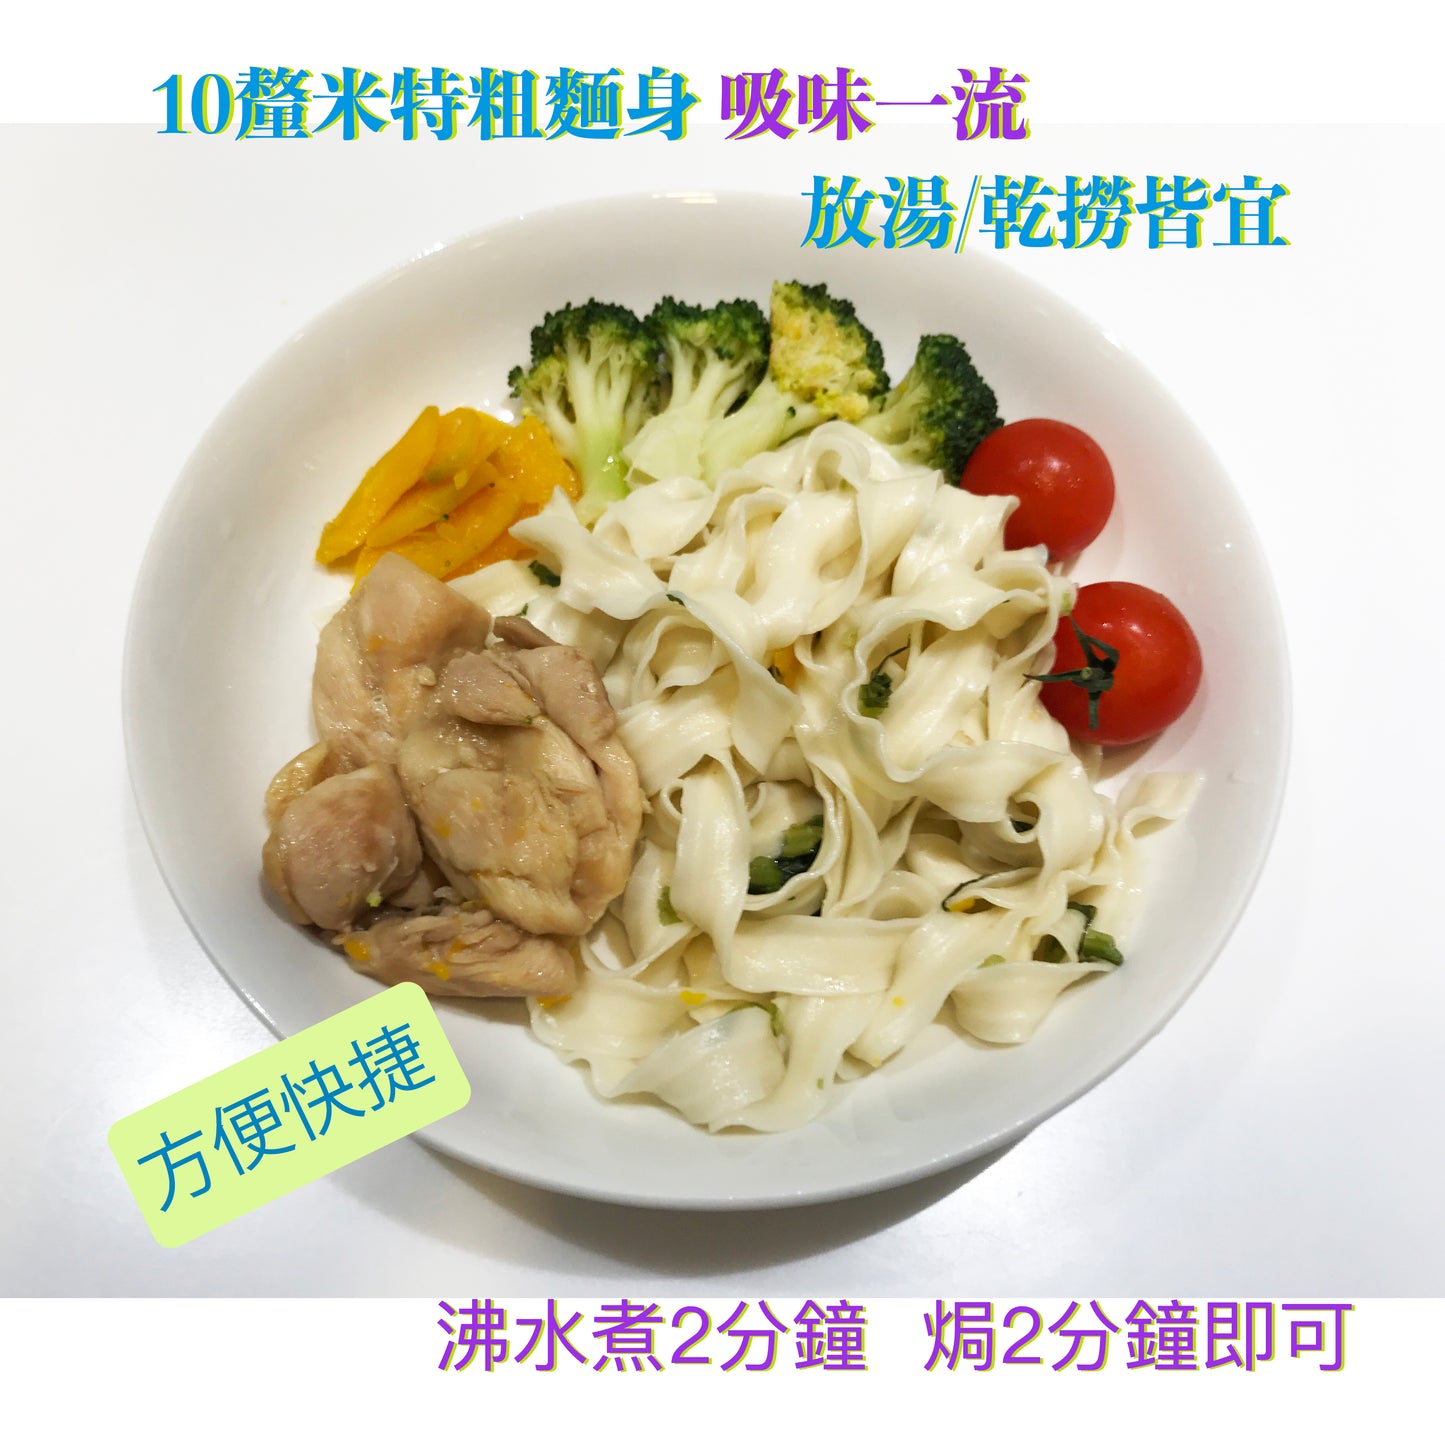 Taiwan Rice Noodles (10mm width) 池農刀削麵(拾釐麵）